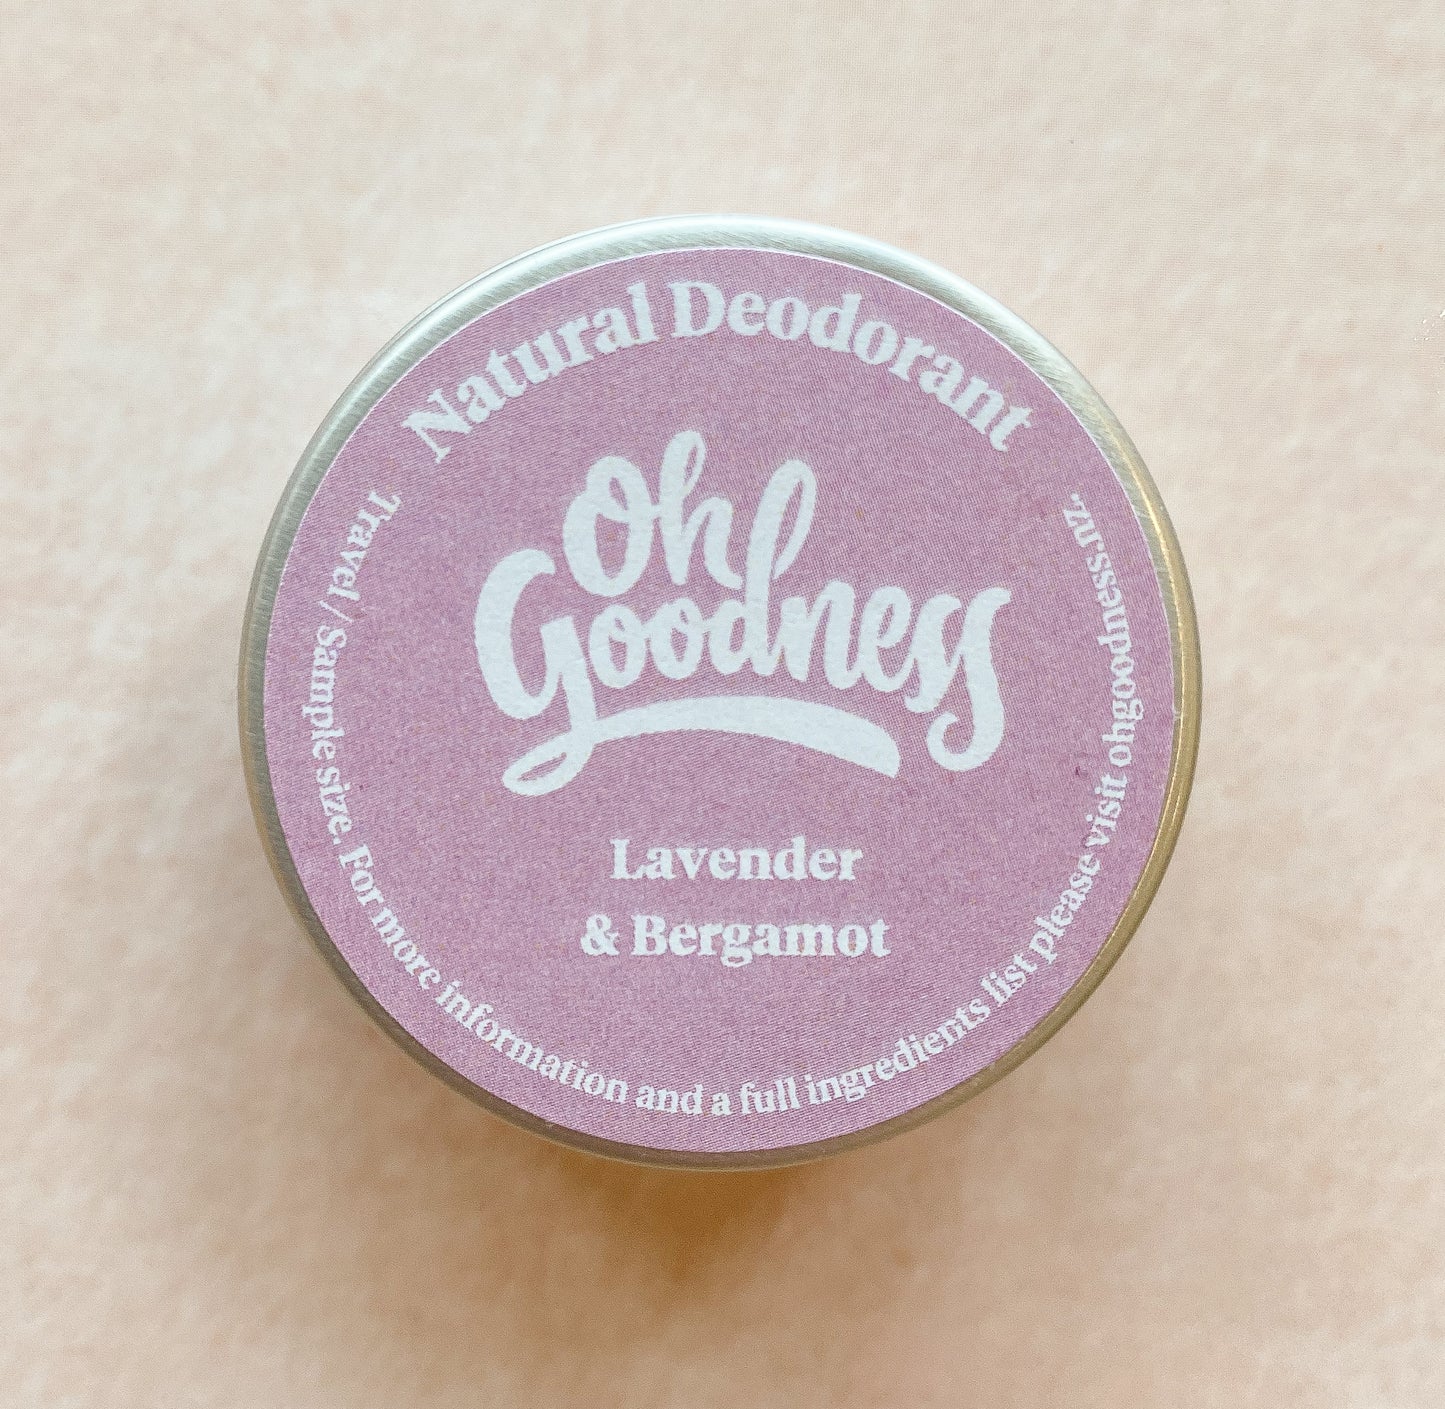 Natural deodorant in travel size - Lavender & Bergamot fragrance with essential oils.